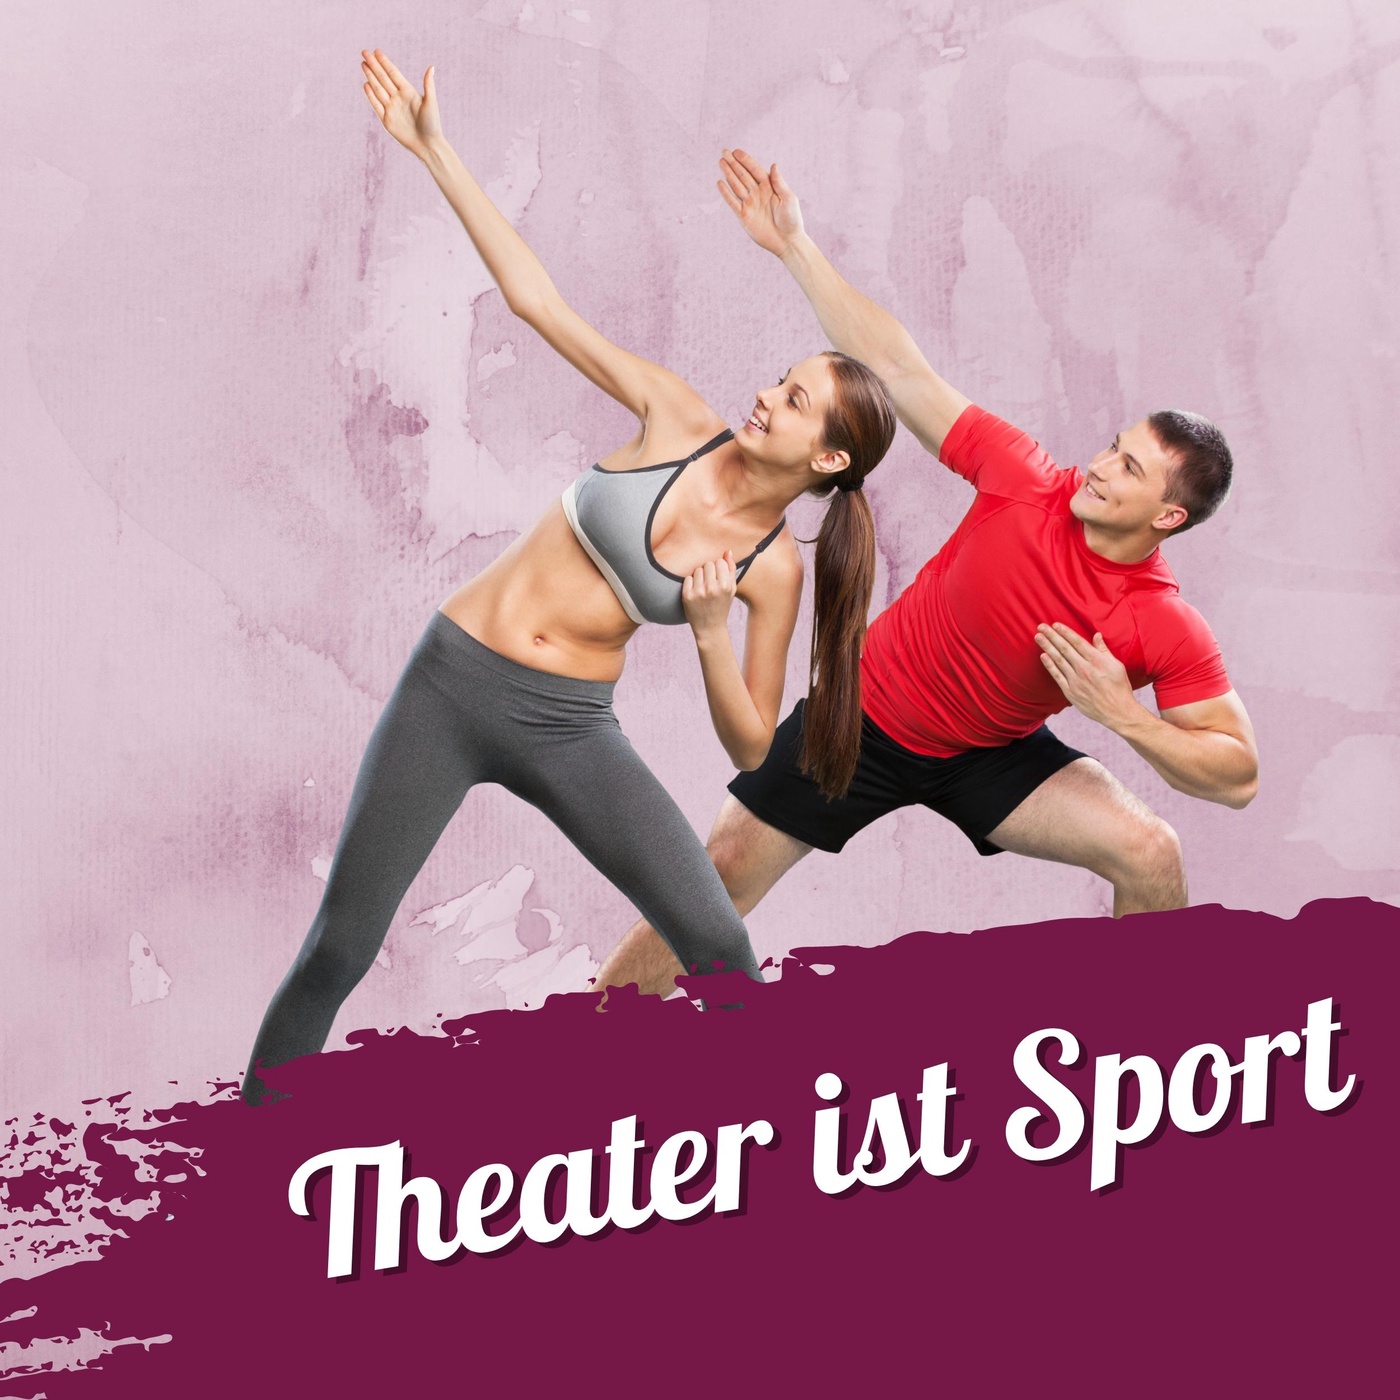 161 – Theater ist Sport